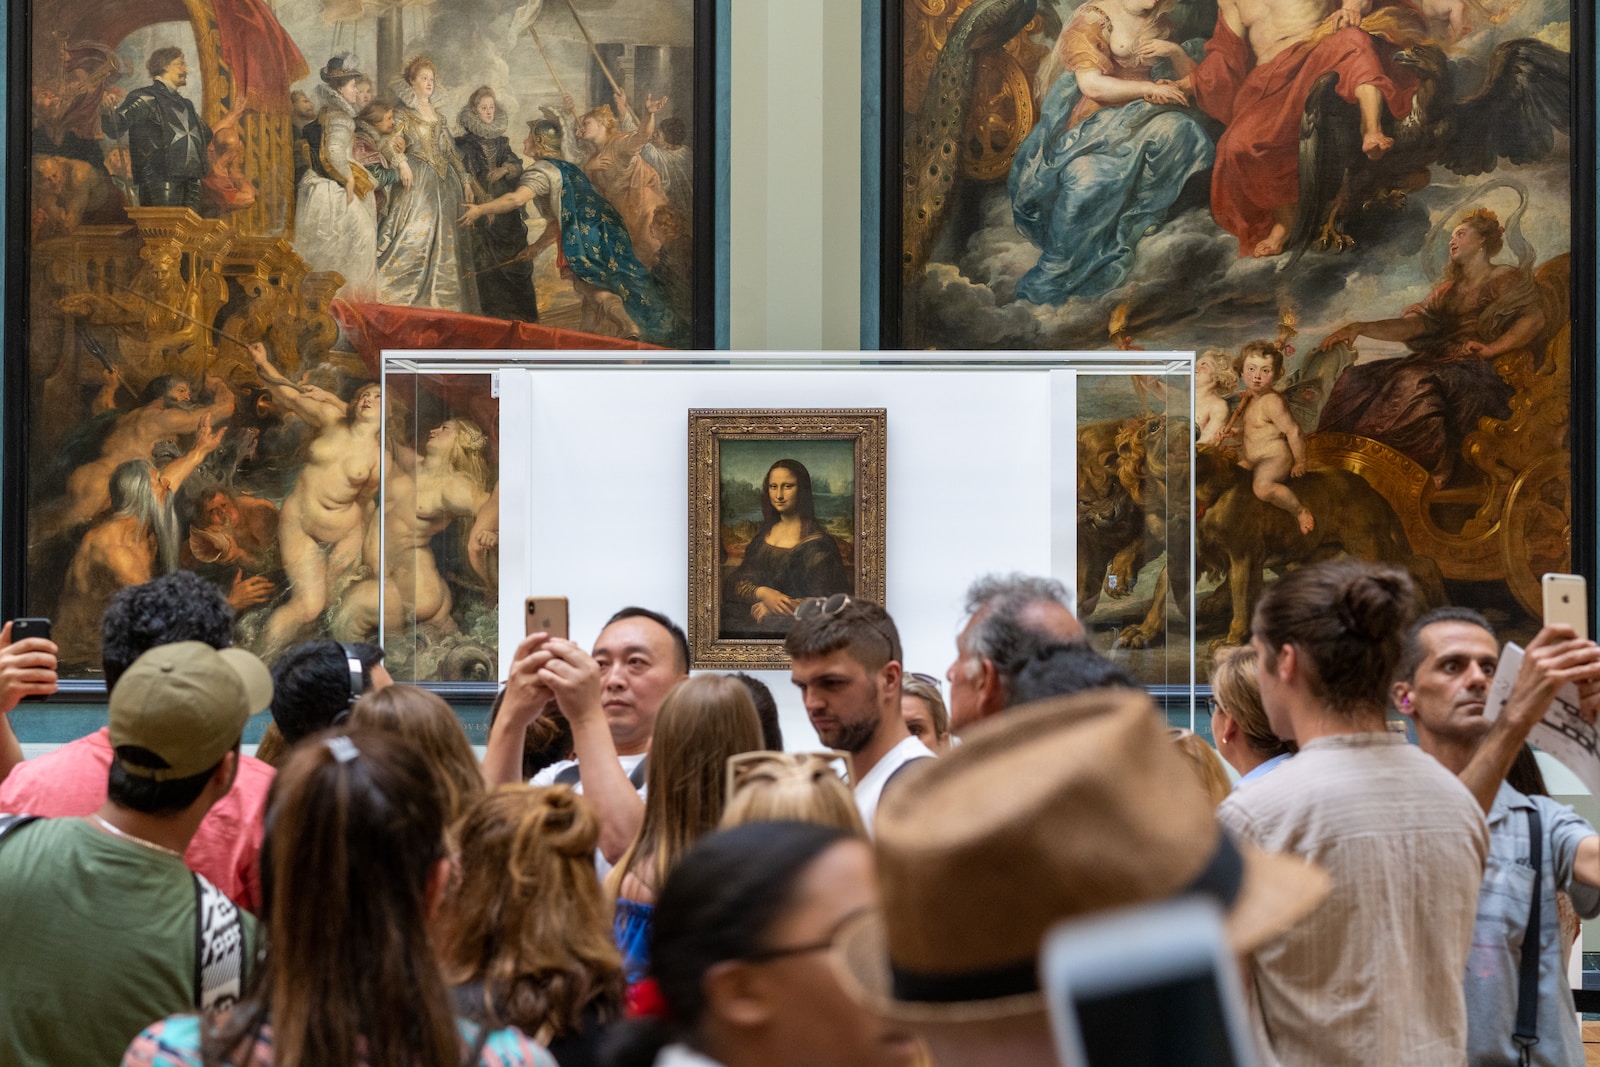 What type of style did Leonardo da Vinci use?people gathering near Monalisa painting